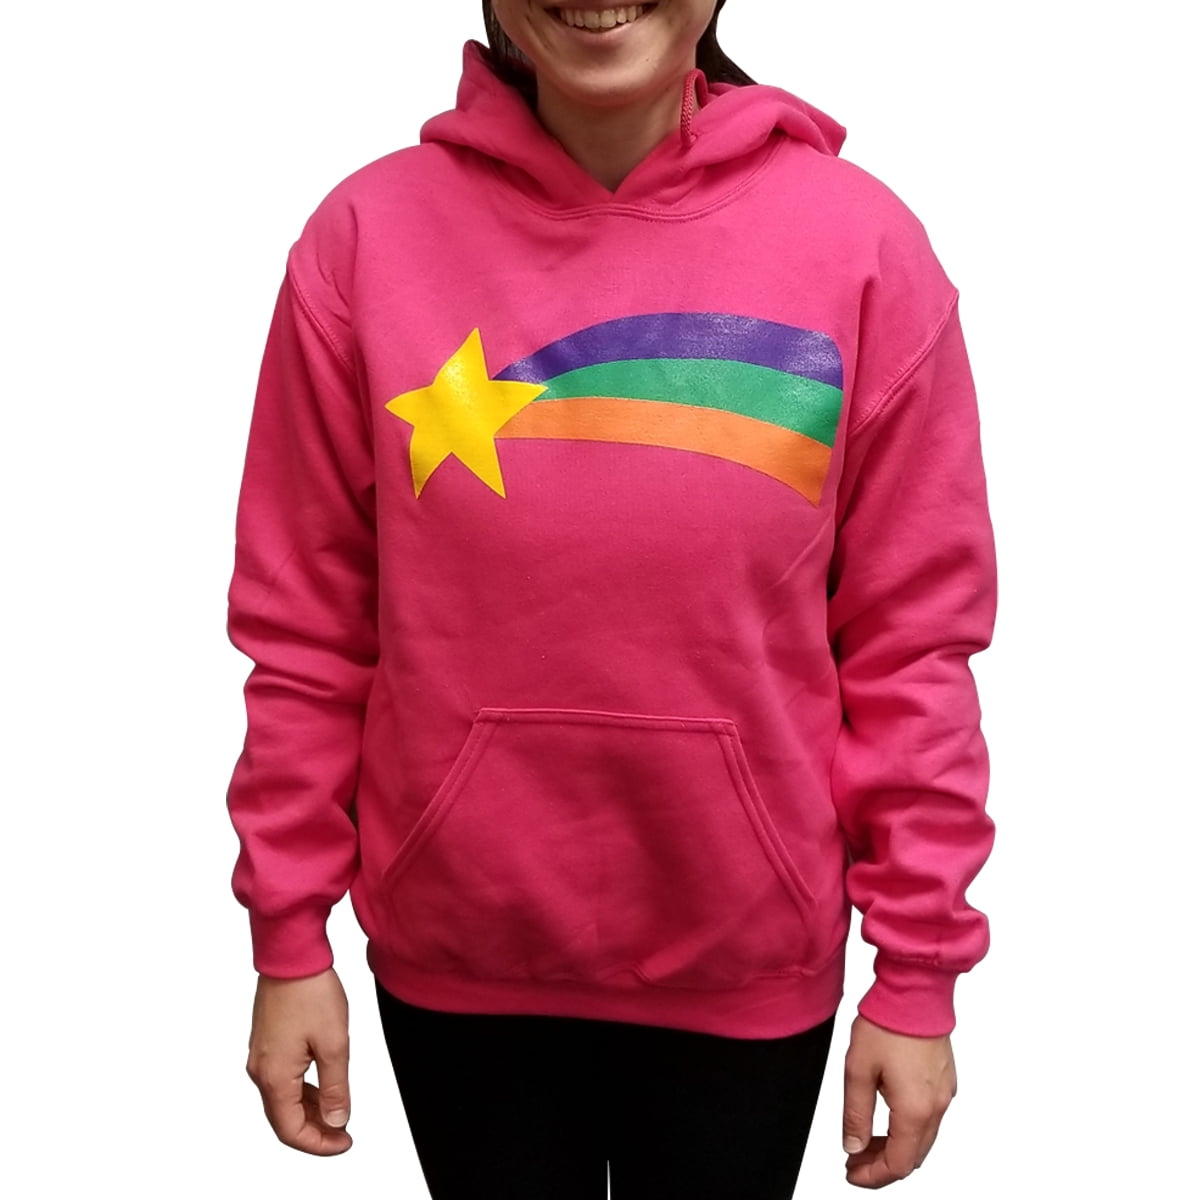 Mabel Pines Sweatshirt Gravity Falls Costume Pink Cosplay Rainbow TV Cartoon